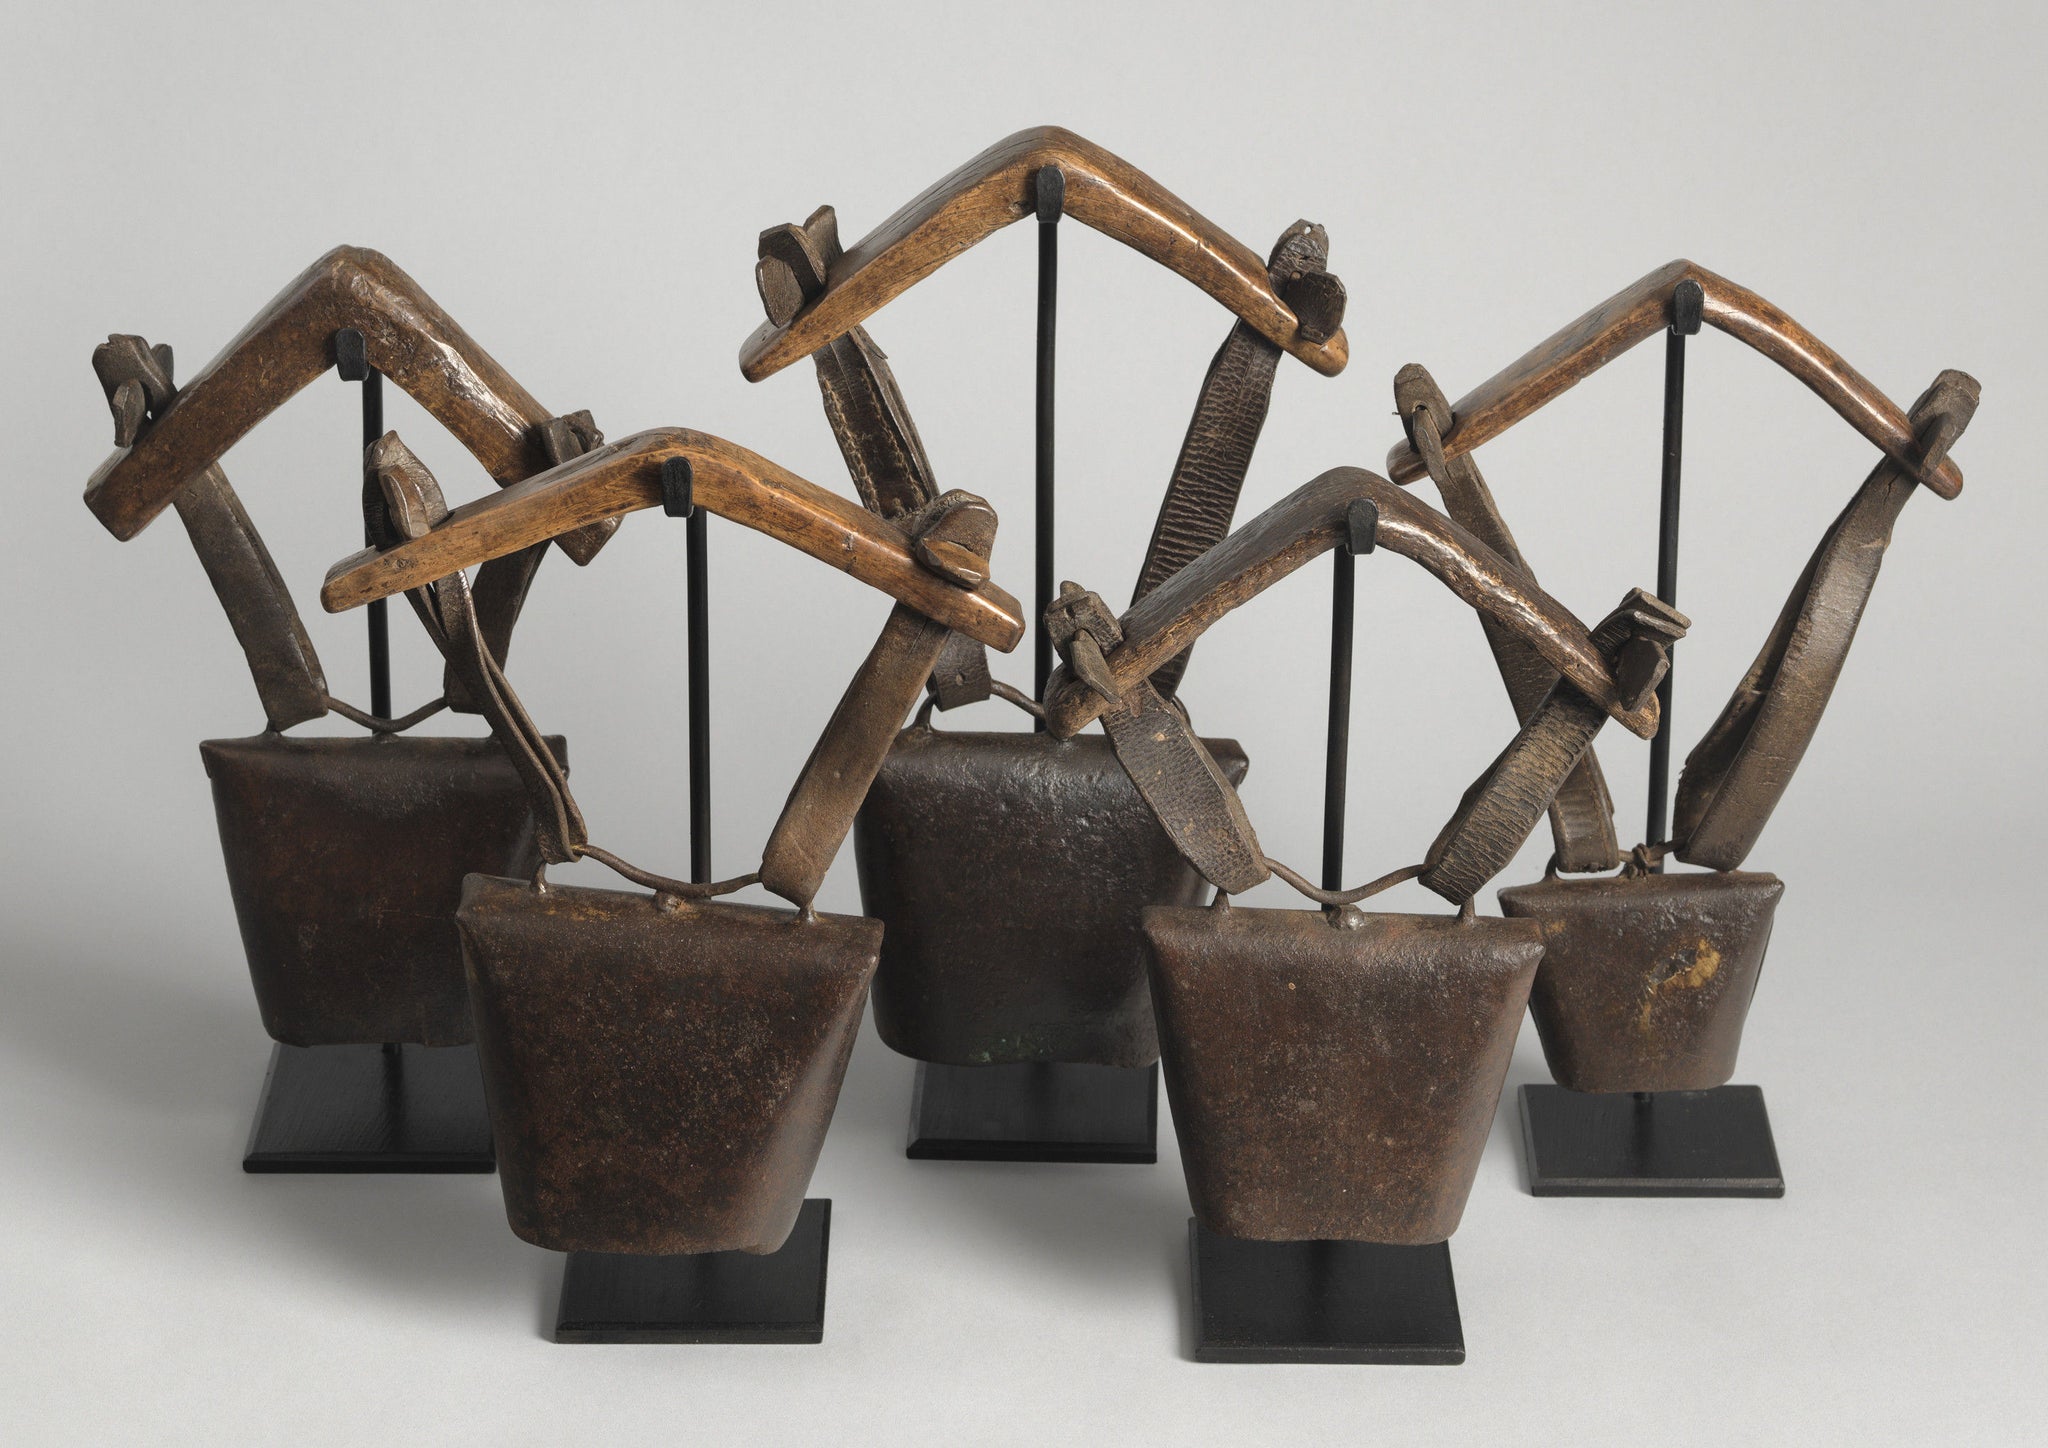 Rare Collection of Five Vernacular Sheep Bells